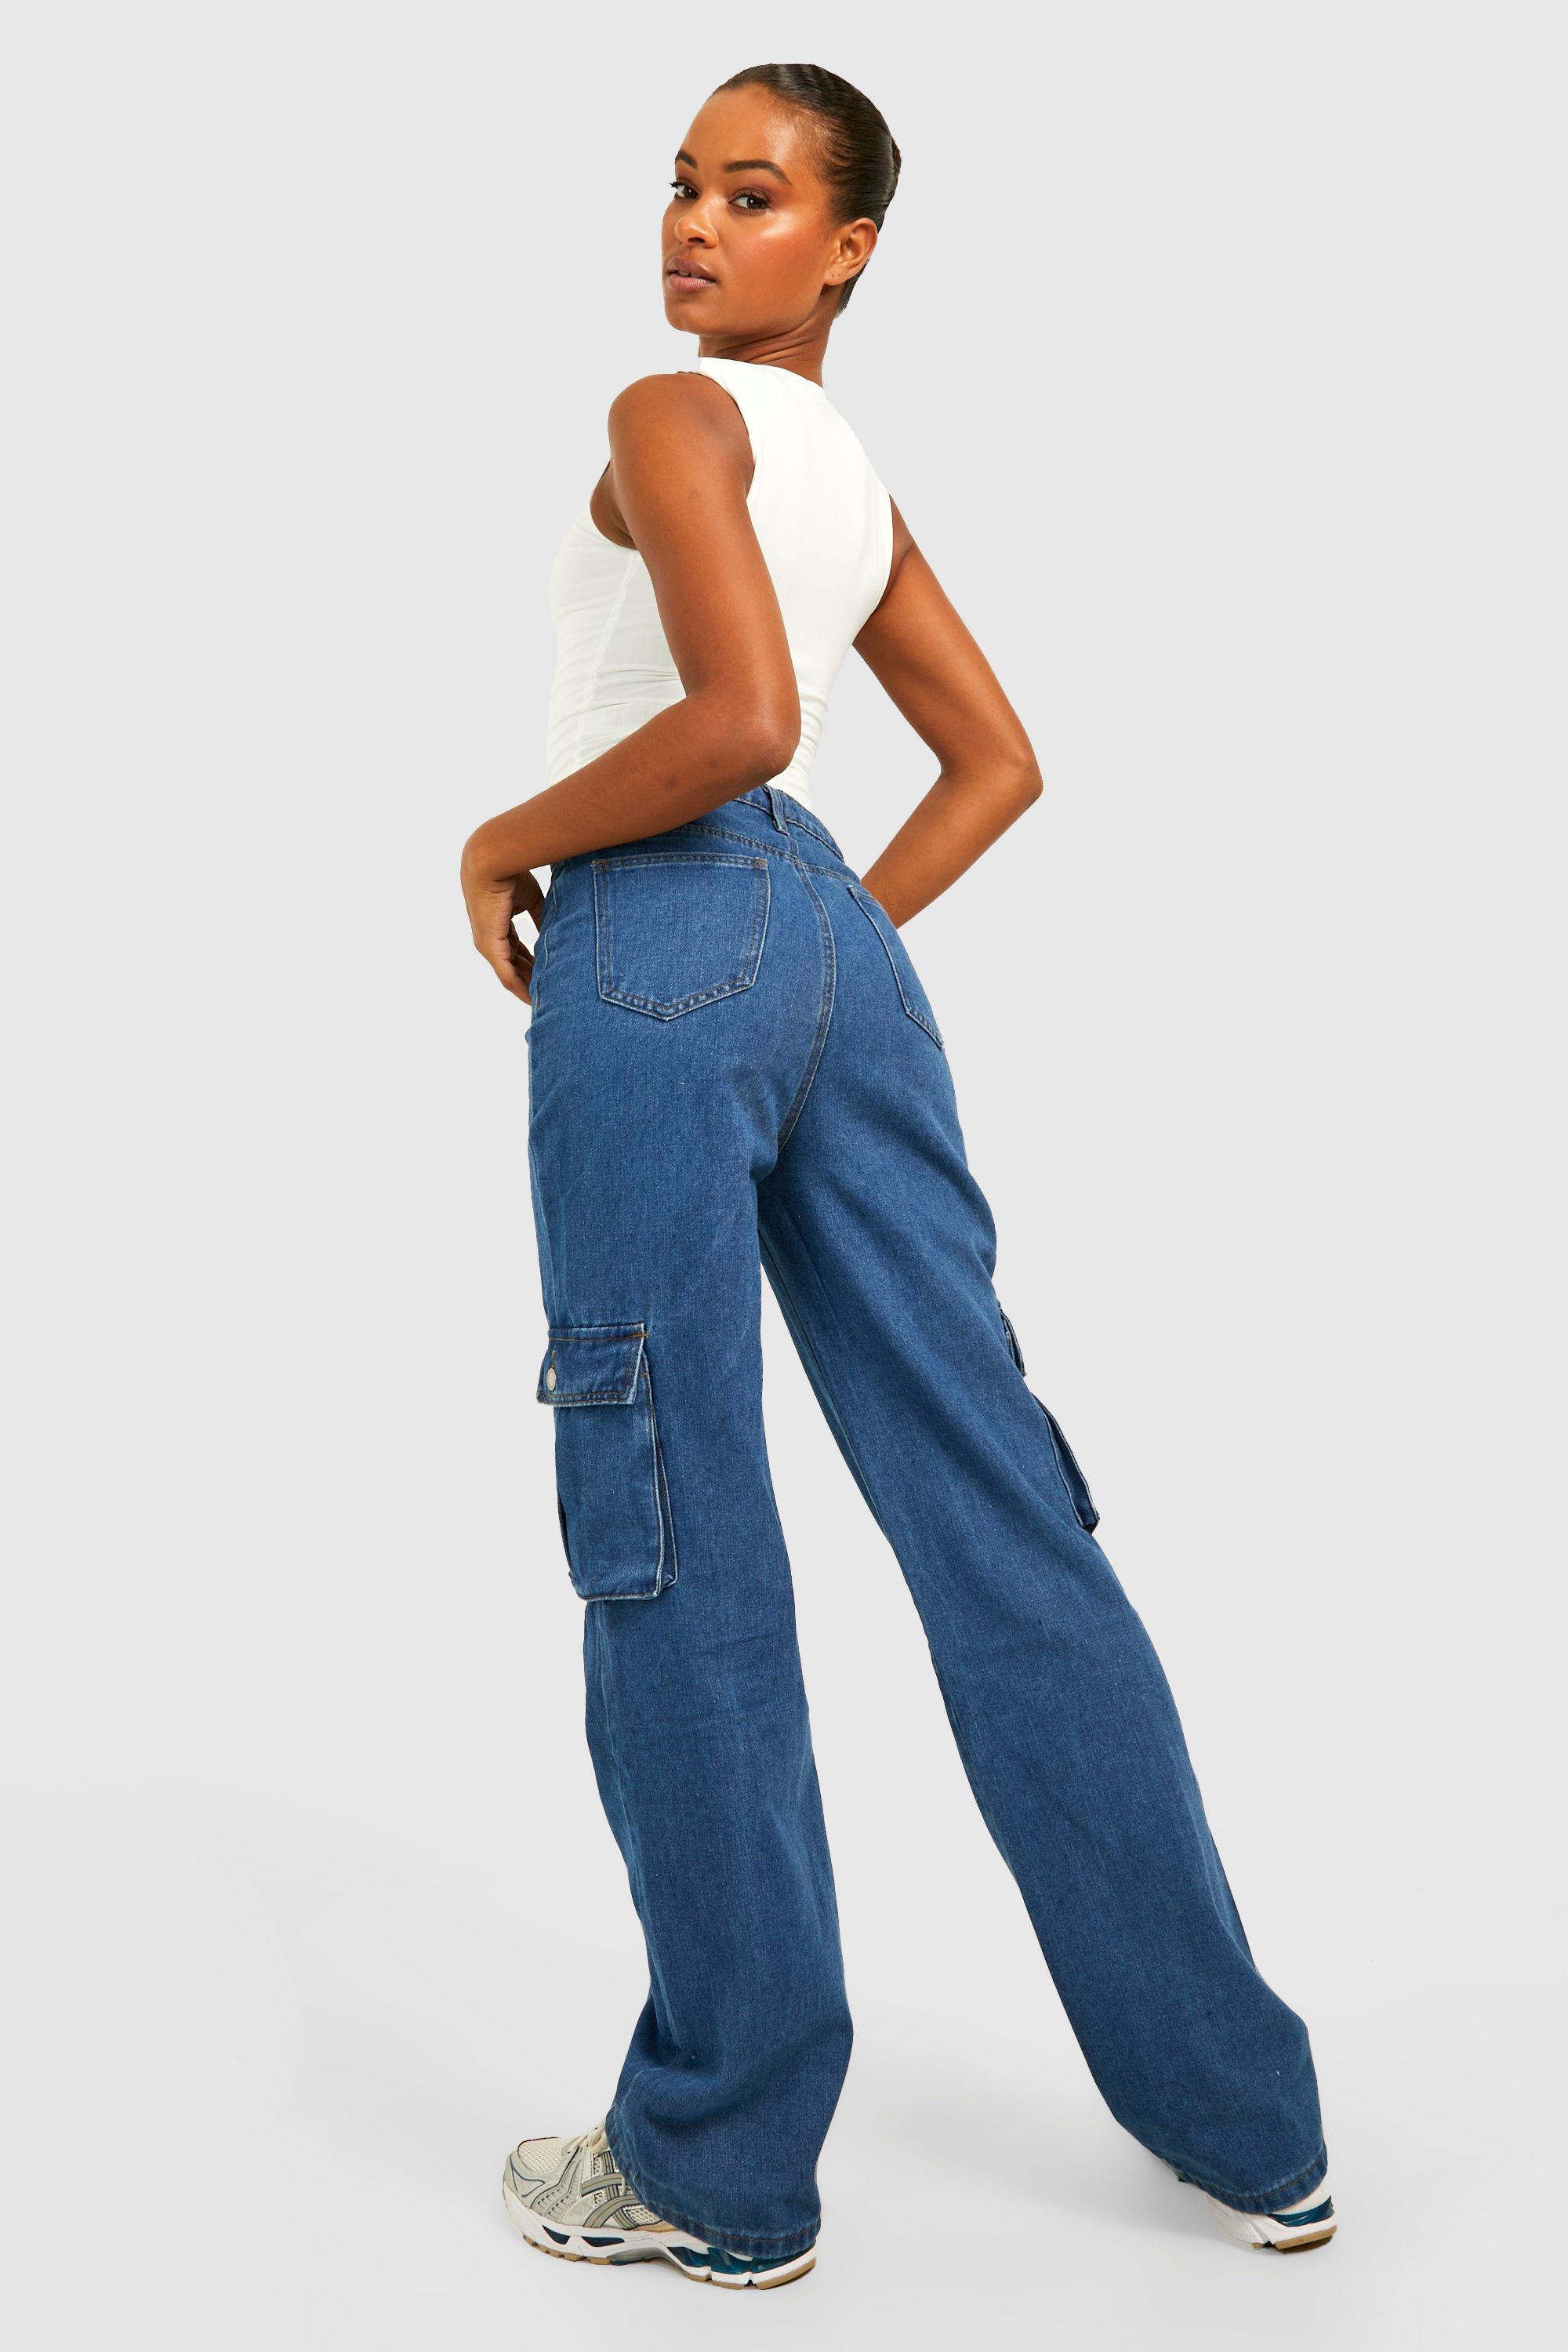 https://media.boohoo.com/i/boohoo/gzz35785_mid%20wash_xl_1/female-mid%20wash-tall-high-waisted-straight-fit-cargo-jeans